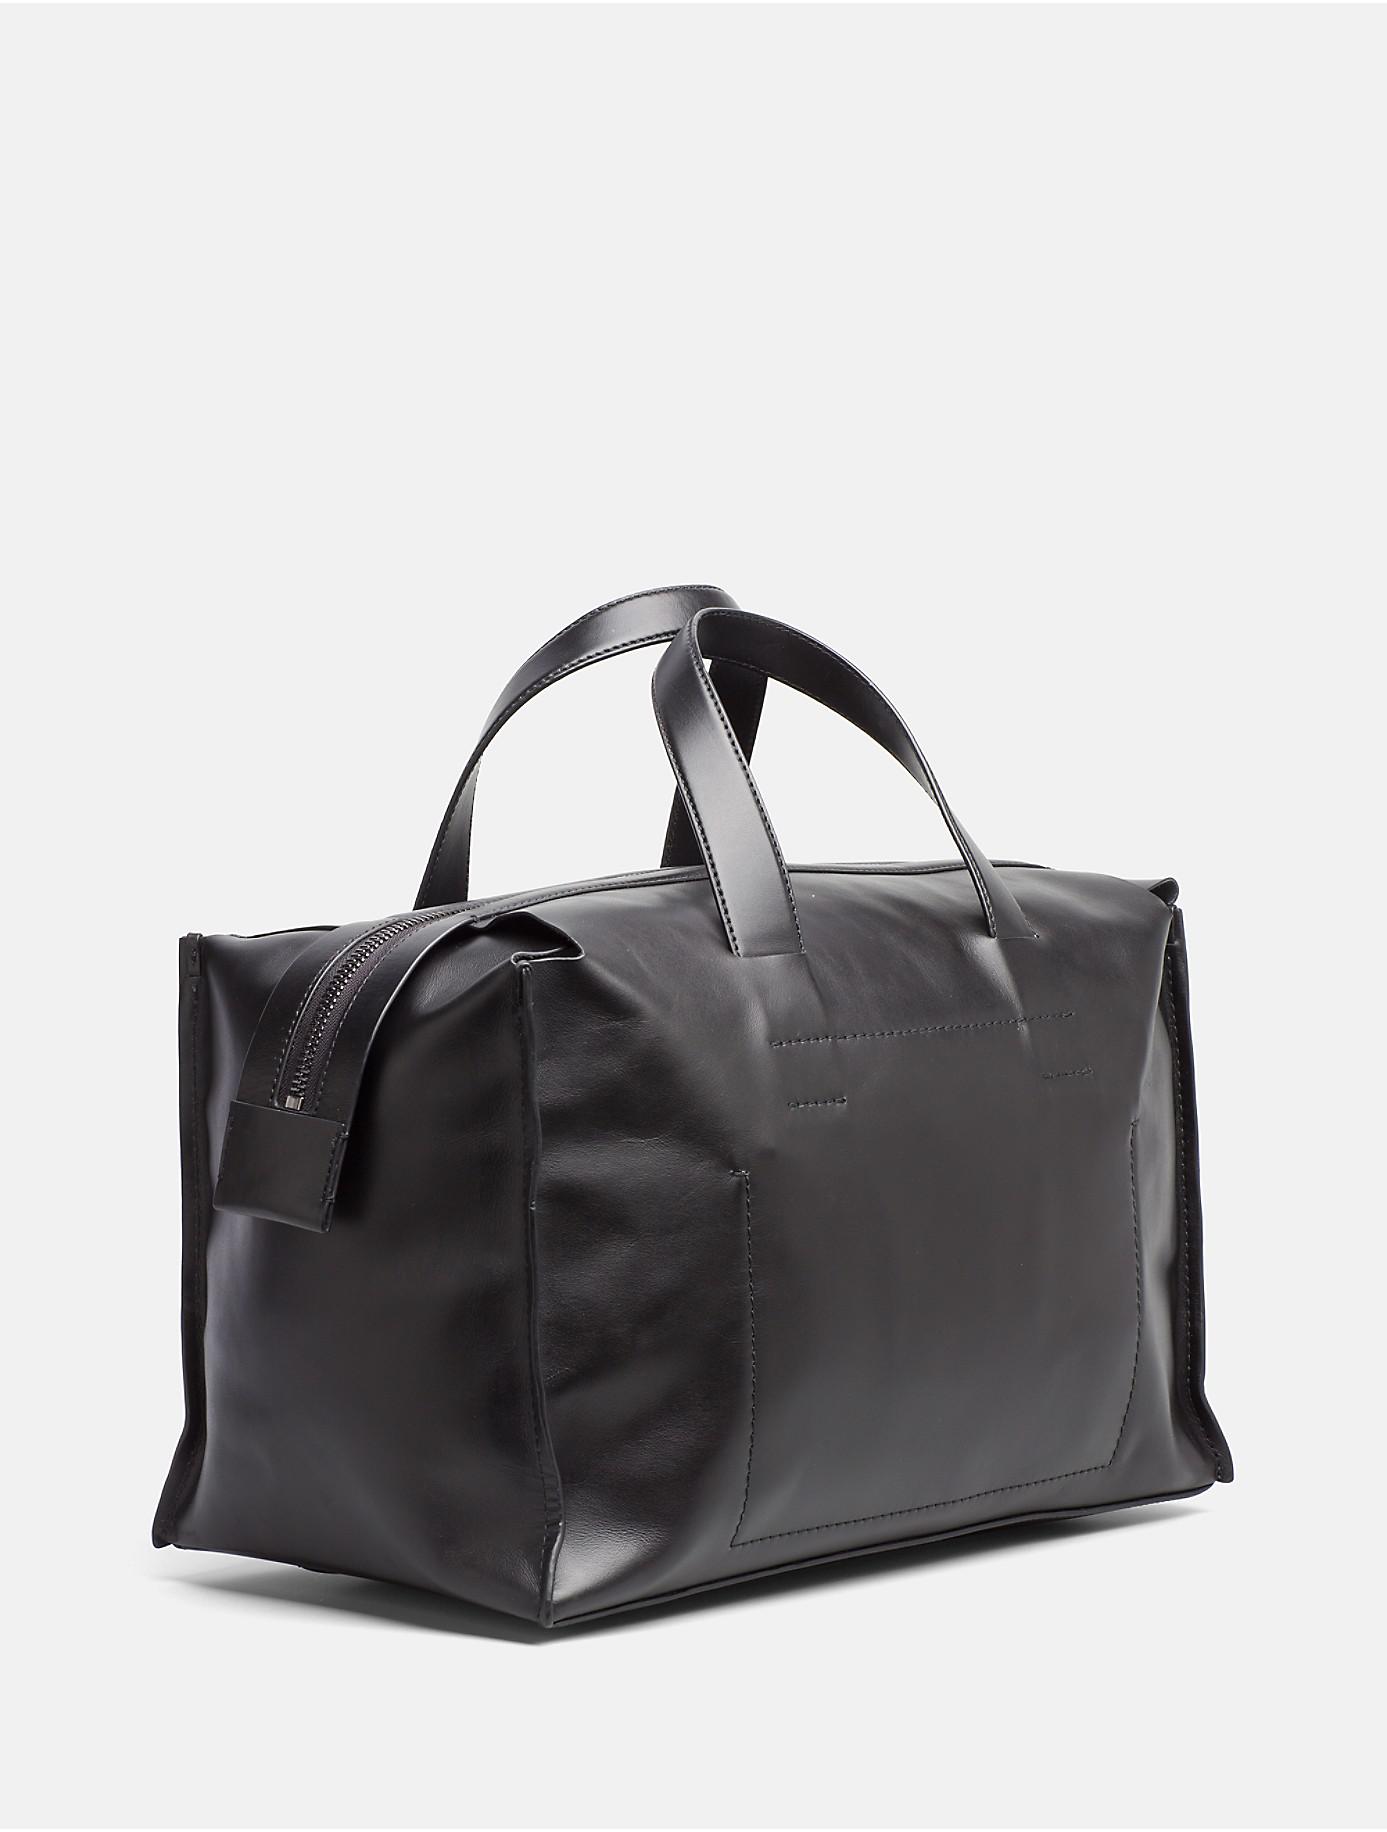 Calvin Klein Leather Medium Duffle Bag in Black for Men - Lyst